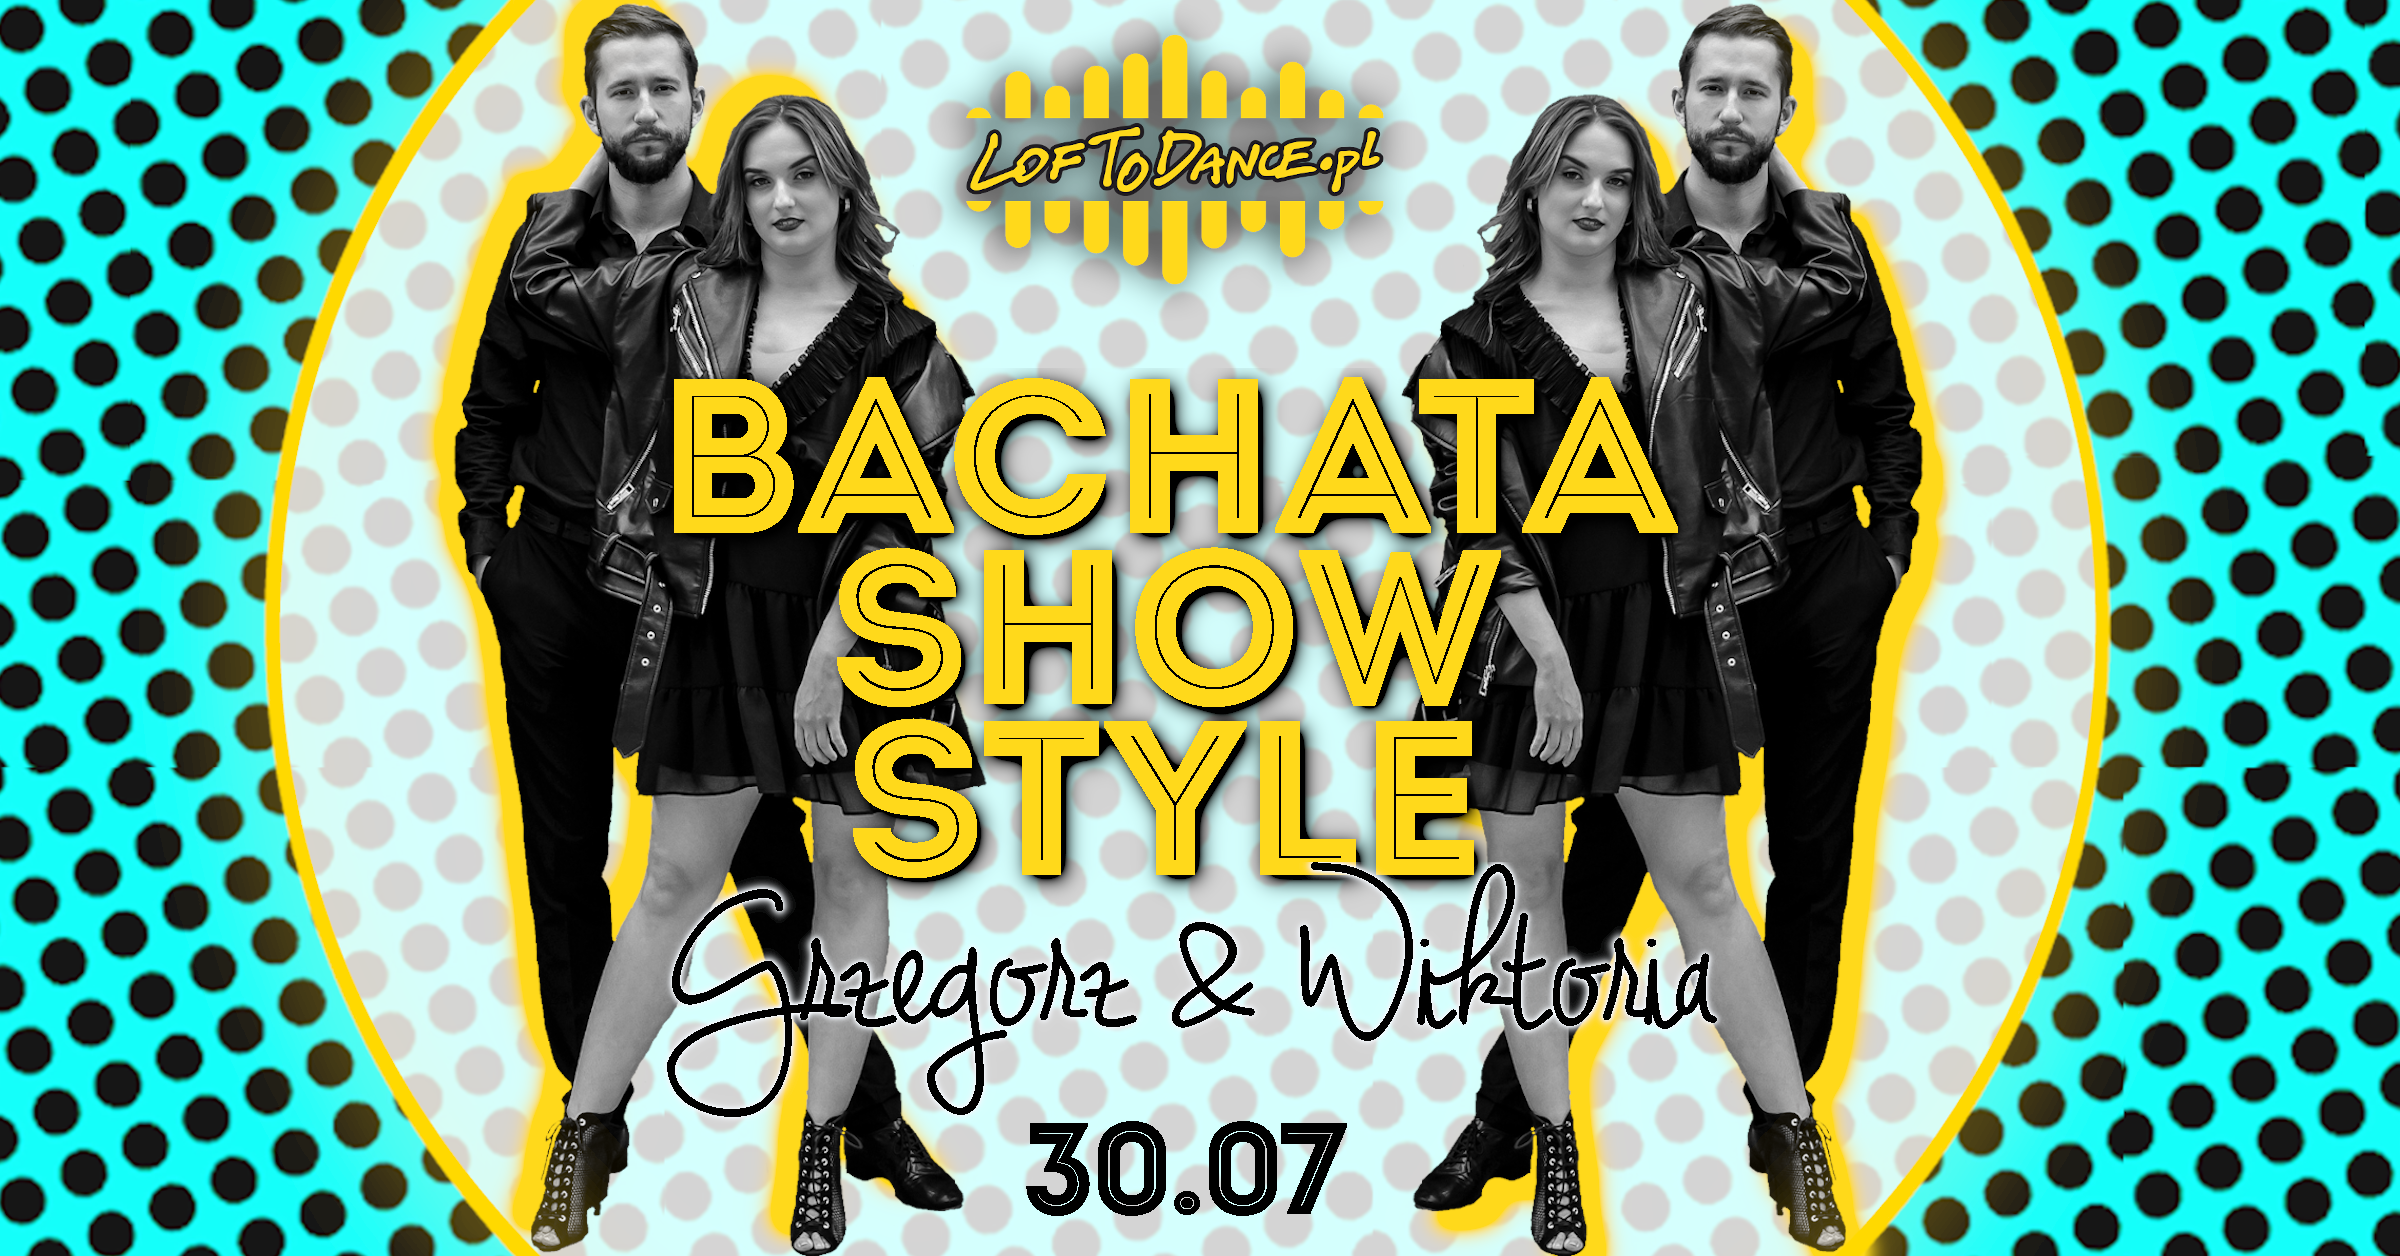 Bachata show style